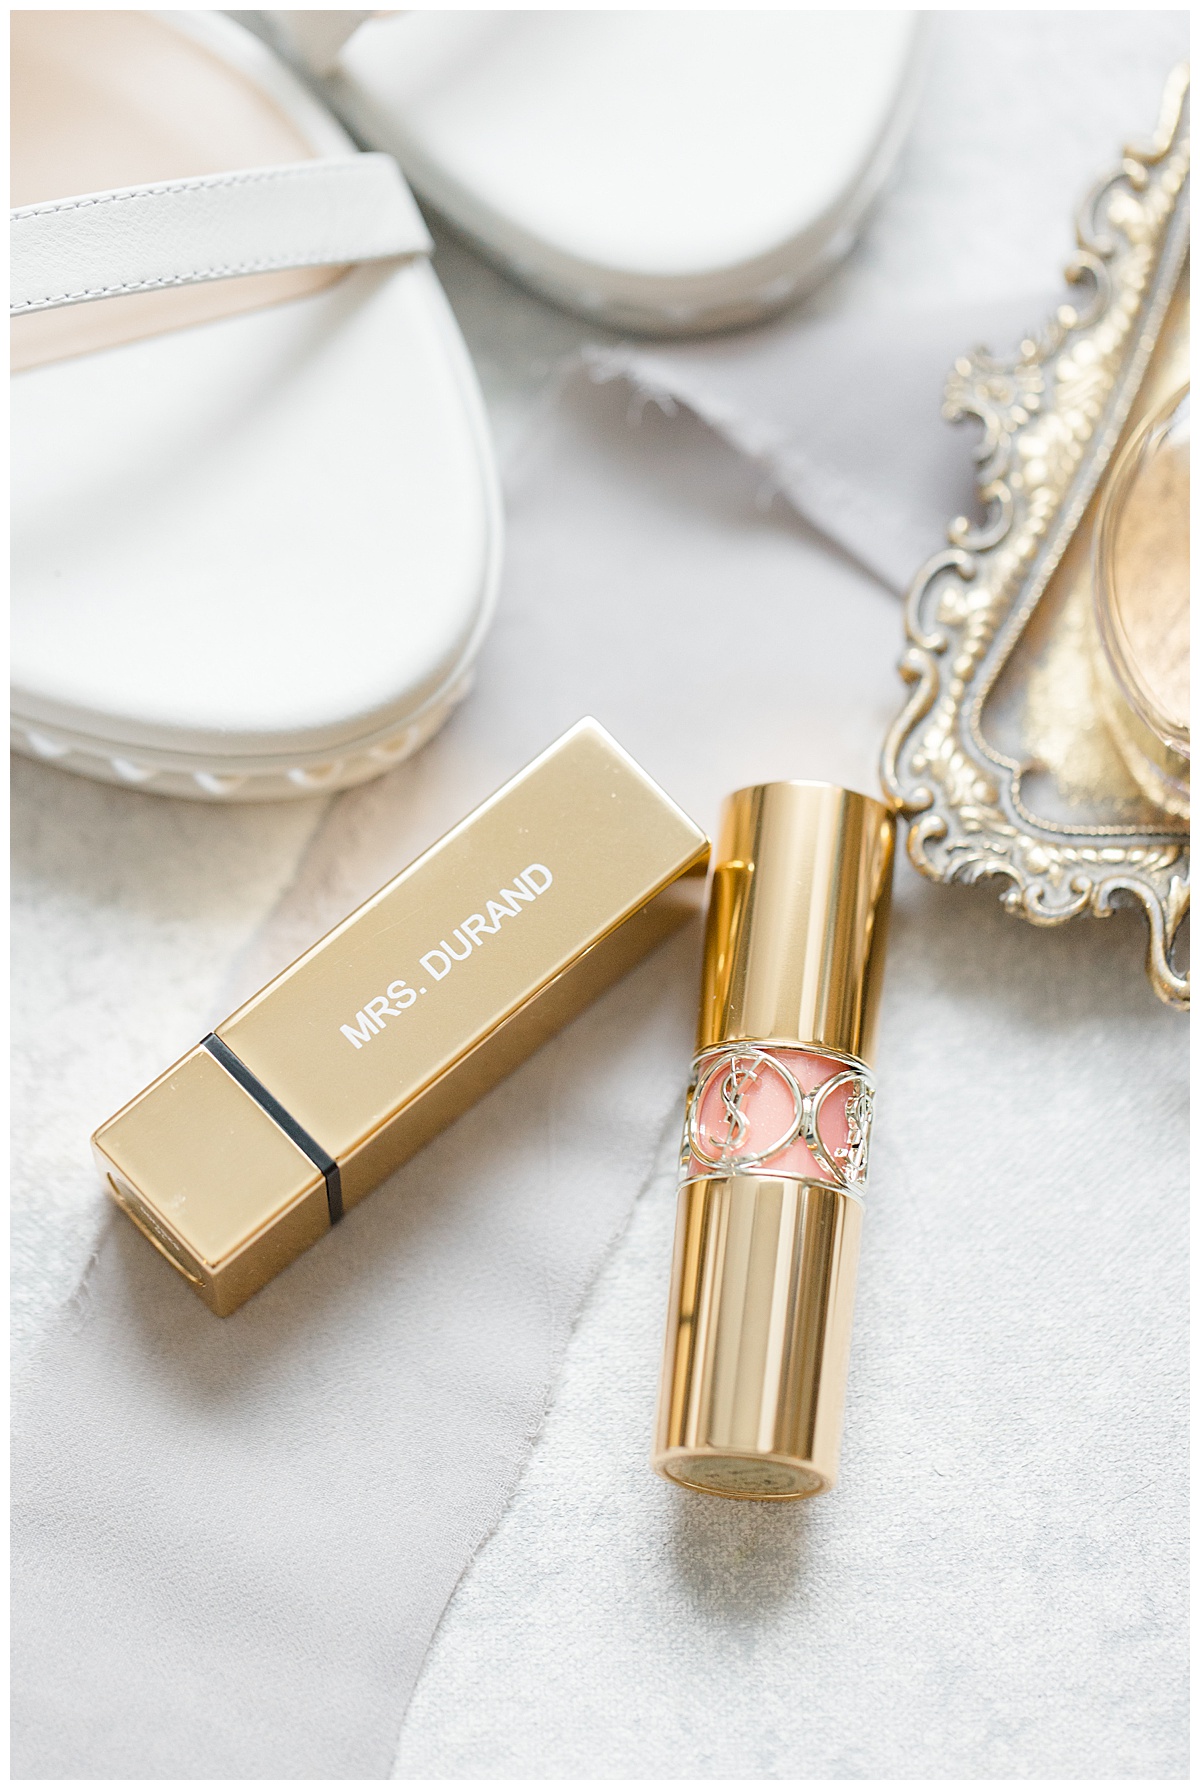 Custom YSL lipstick for wedding day in gold case. 